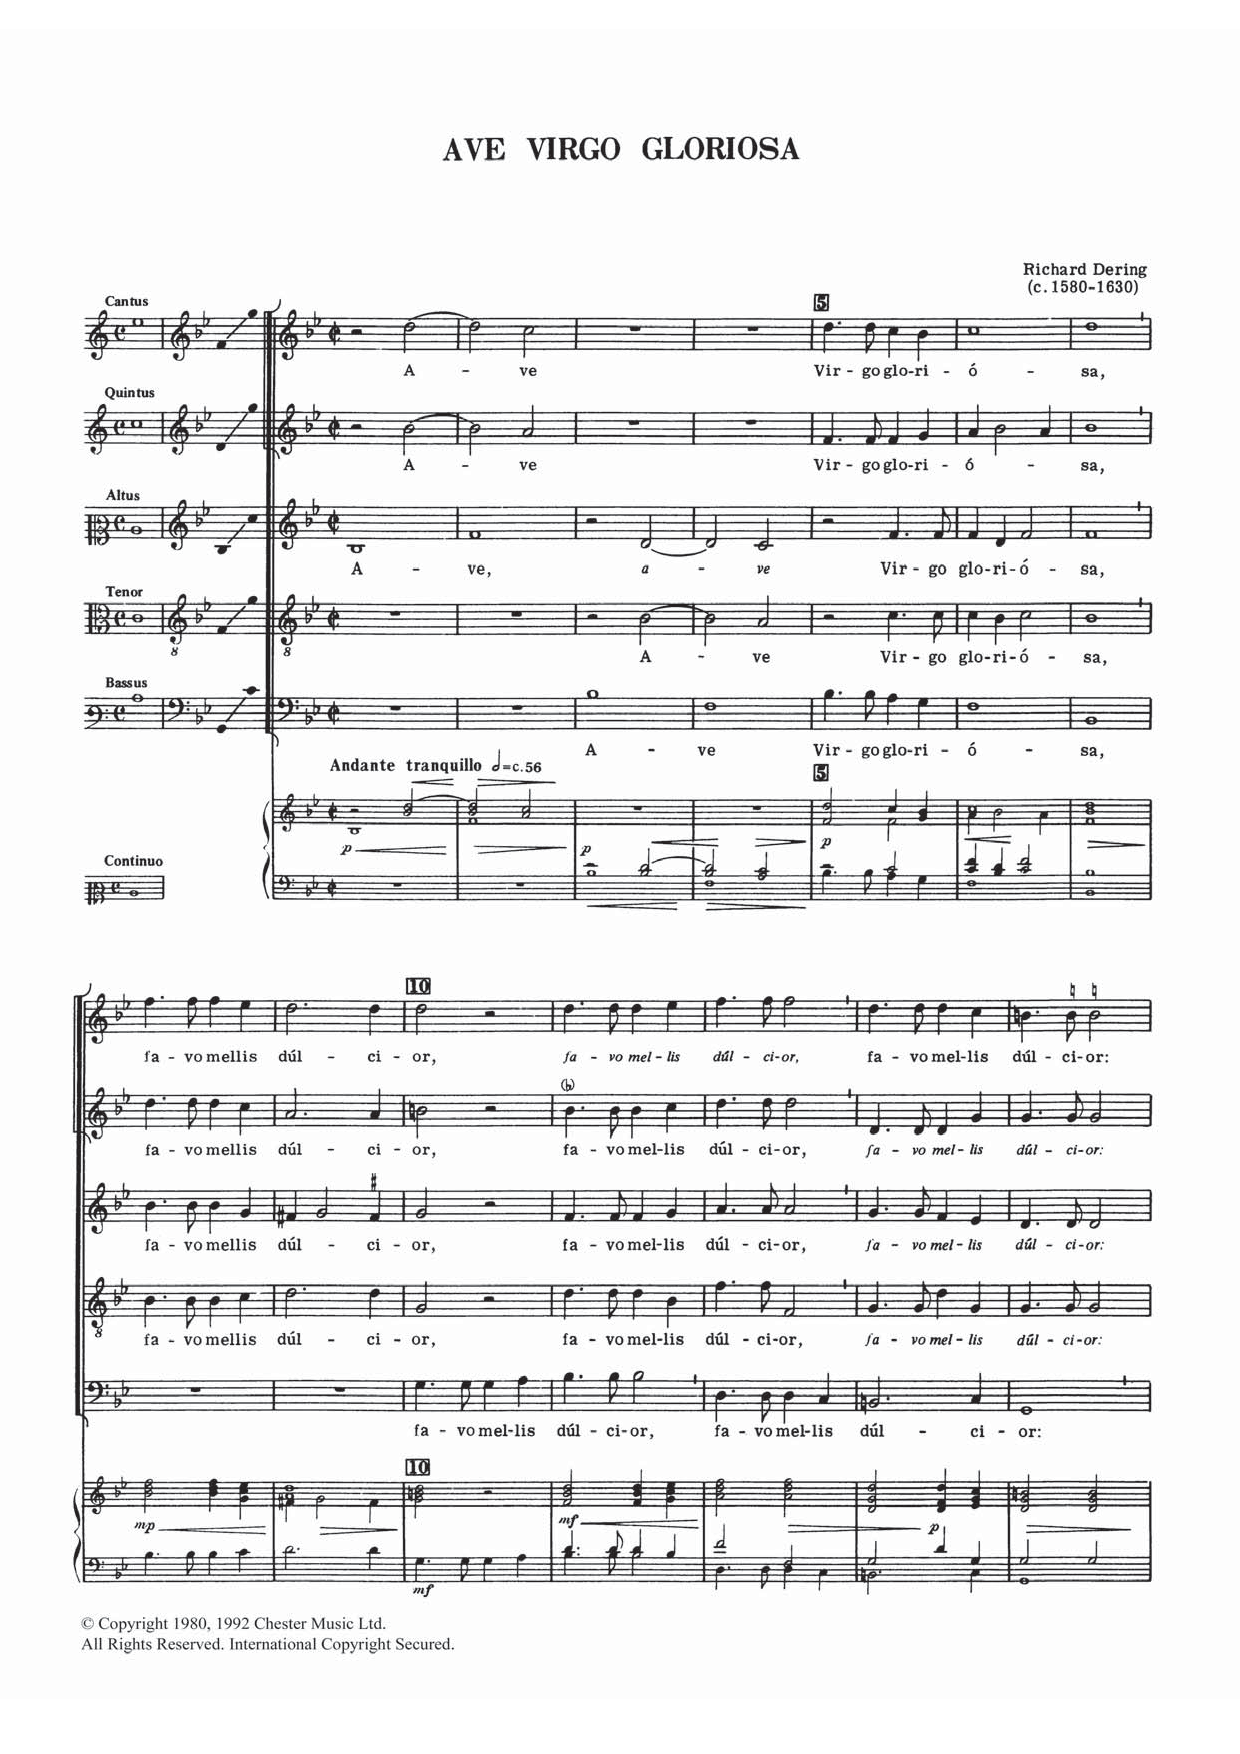 Richard Dering Ave Virgo Gloriosa Sheet Music Notes & Chords for Choral SAATB - Download or Print PDF